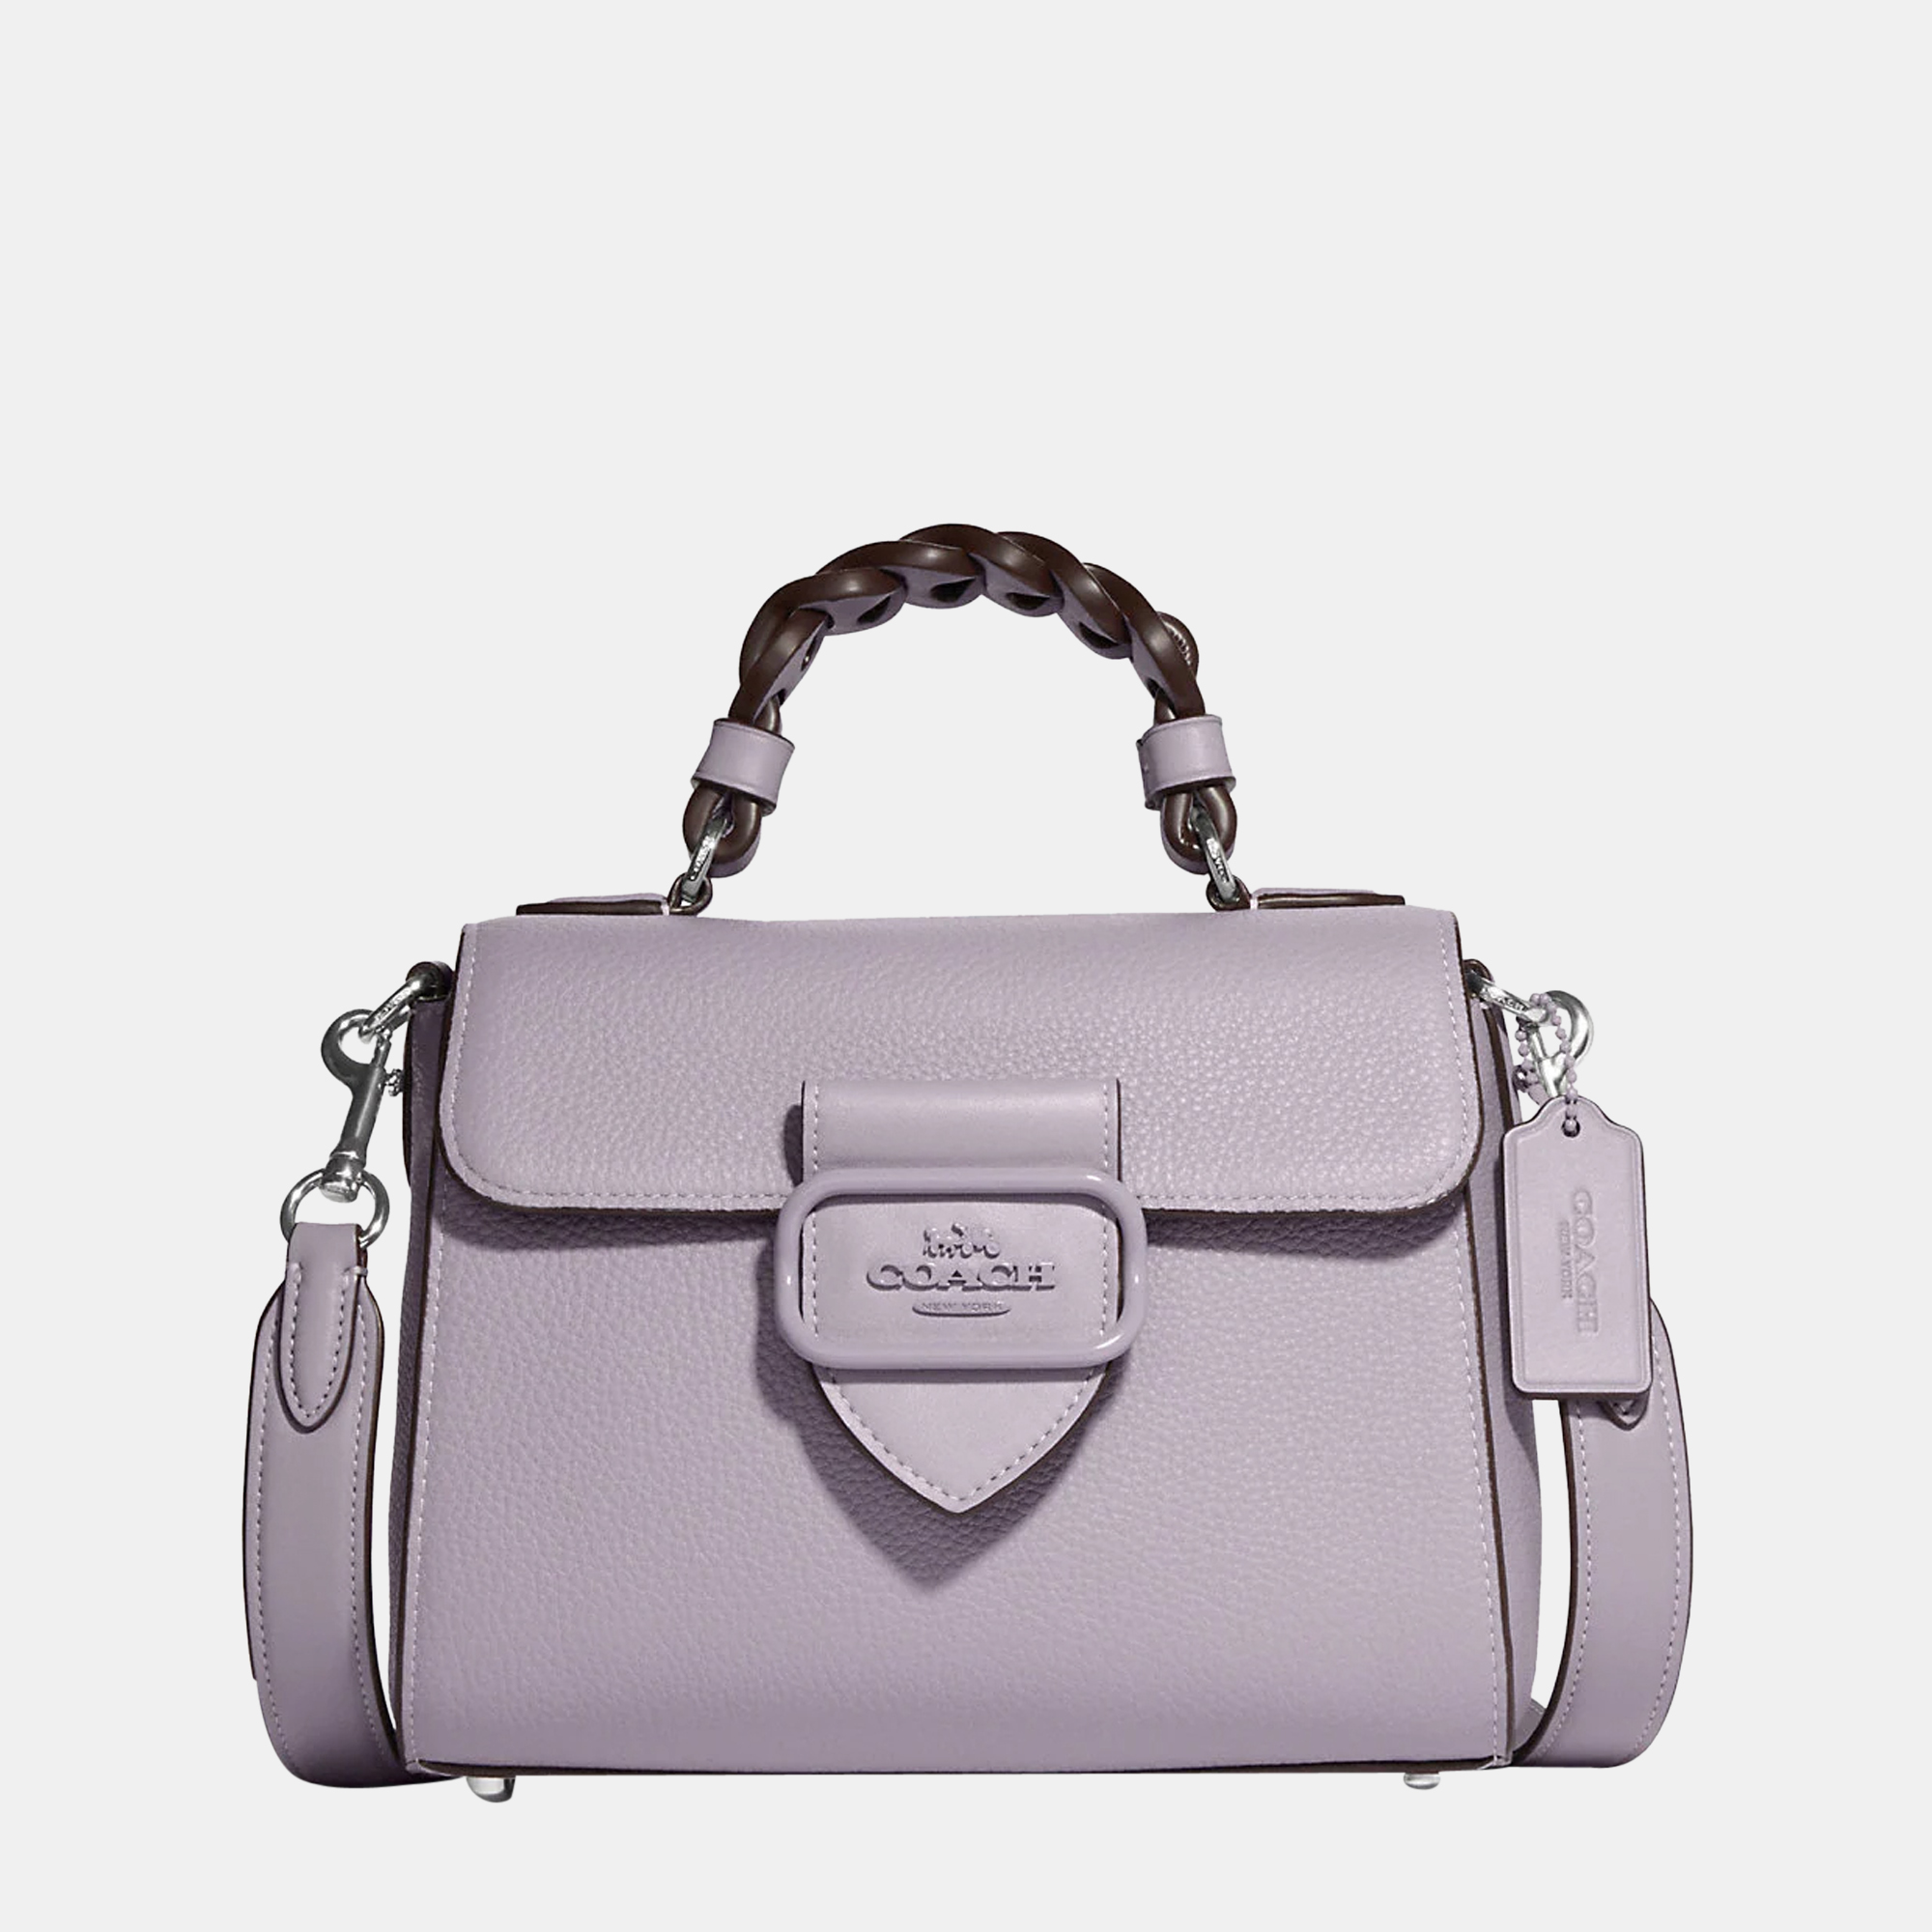 Coach Lavender Leather Top Handle Bag